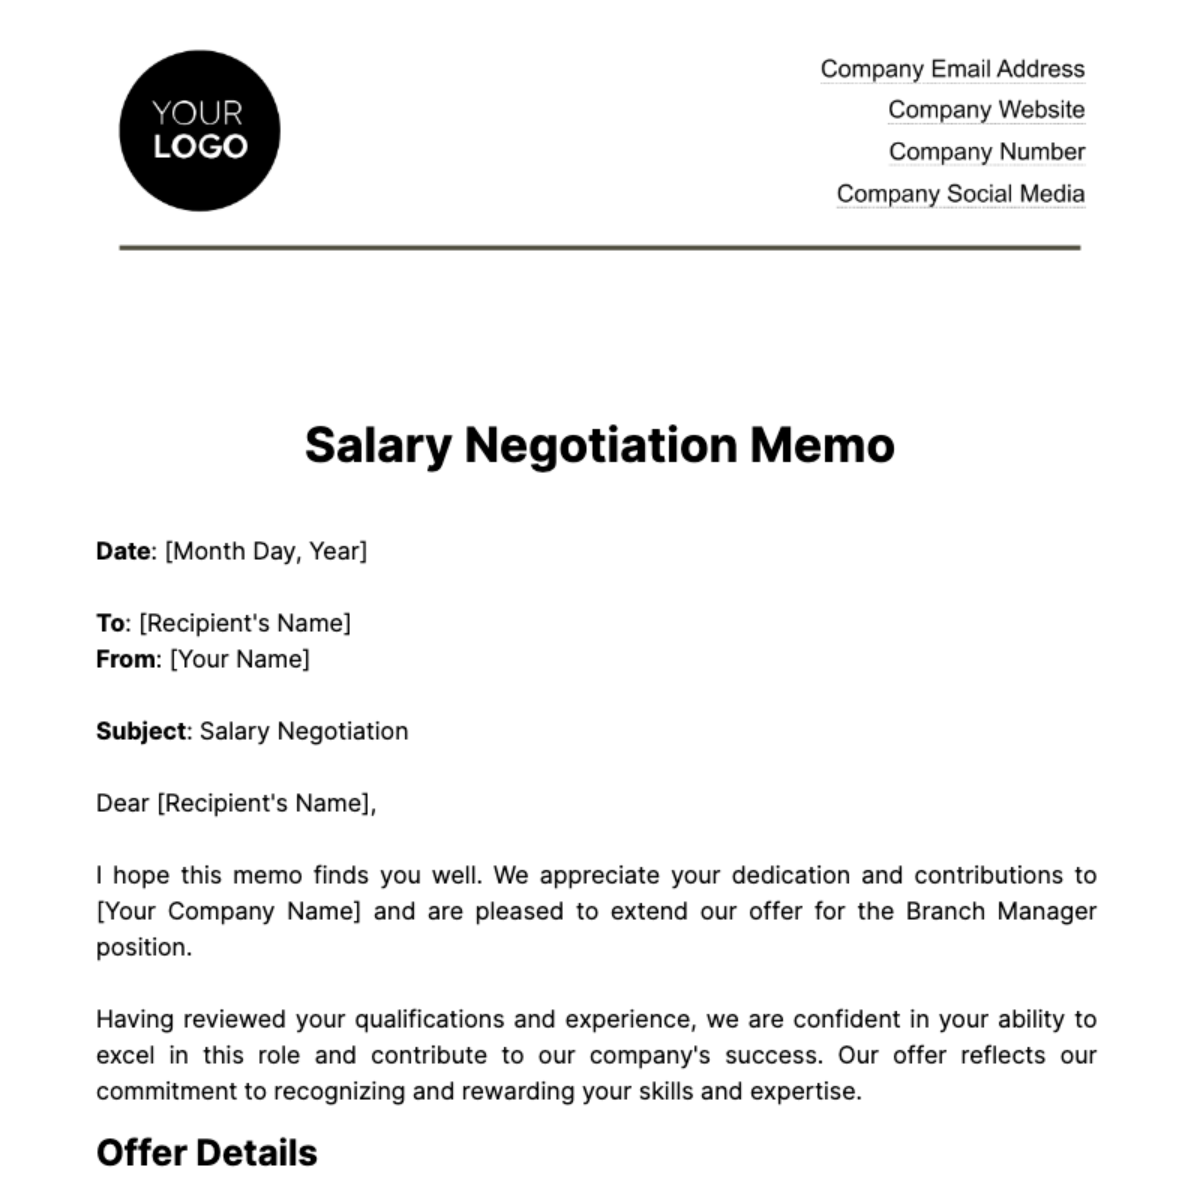 Salary Negotiation Memo HR Template